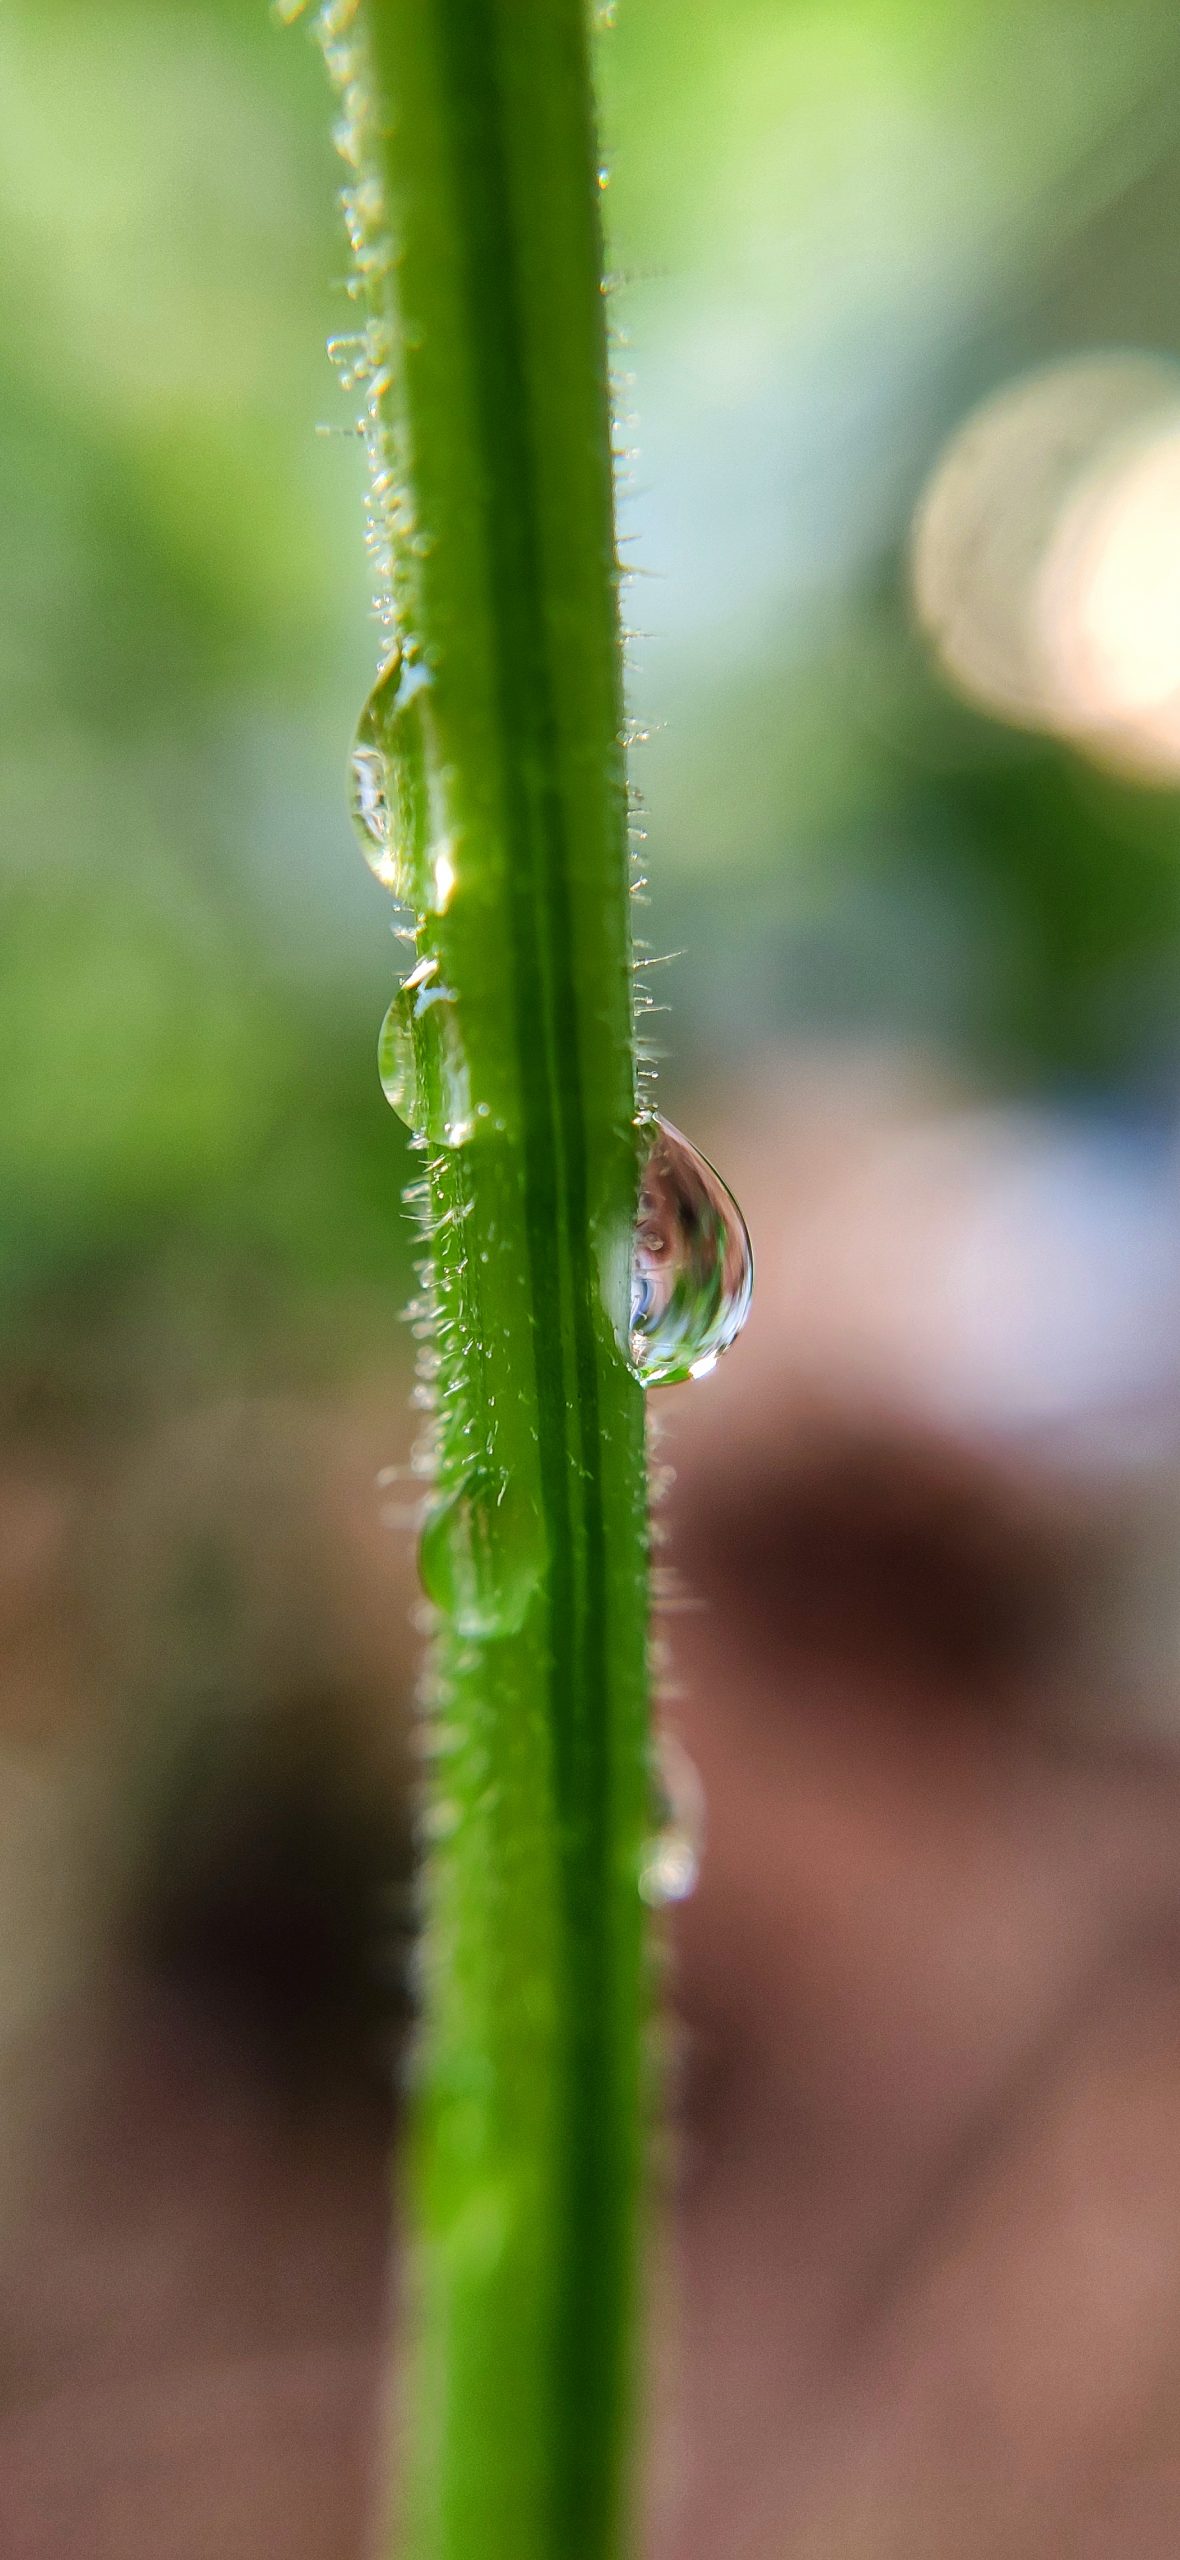 Drops on plant stem